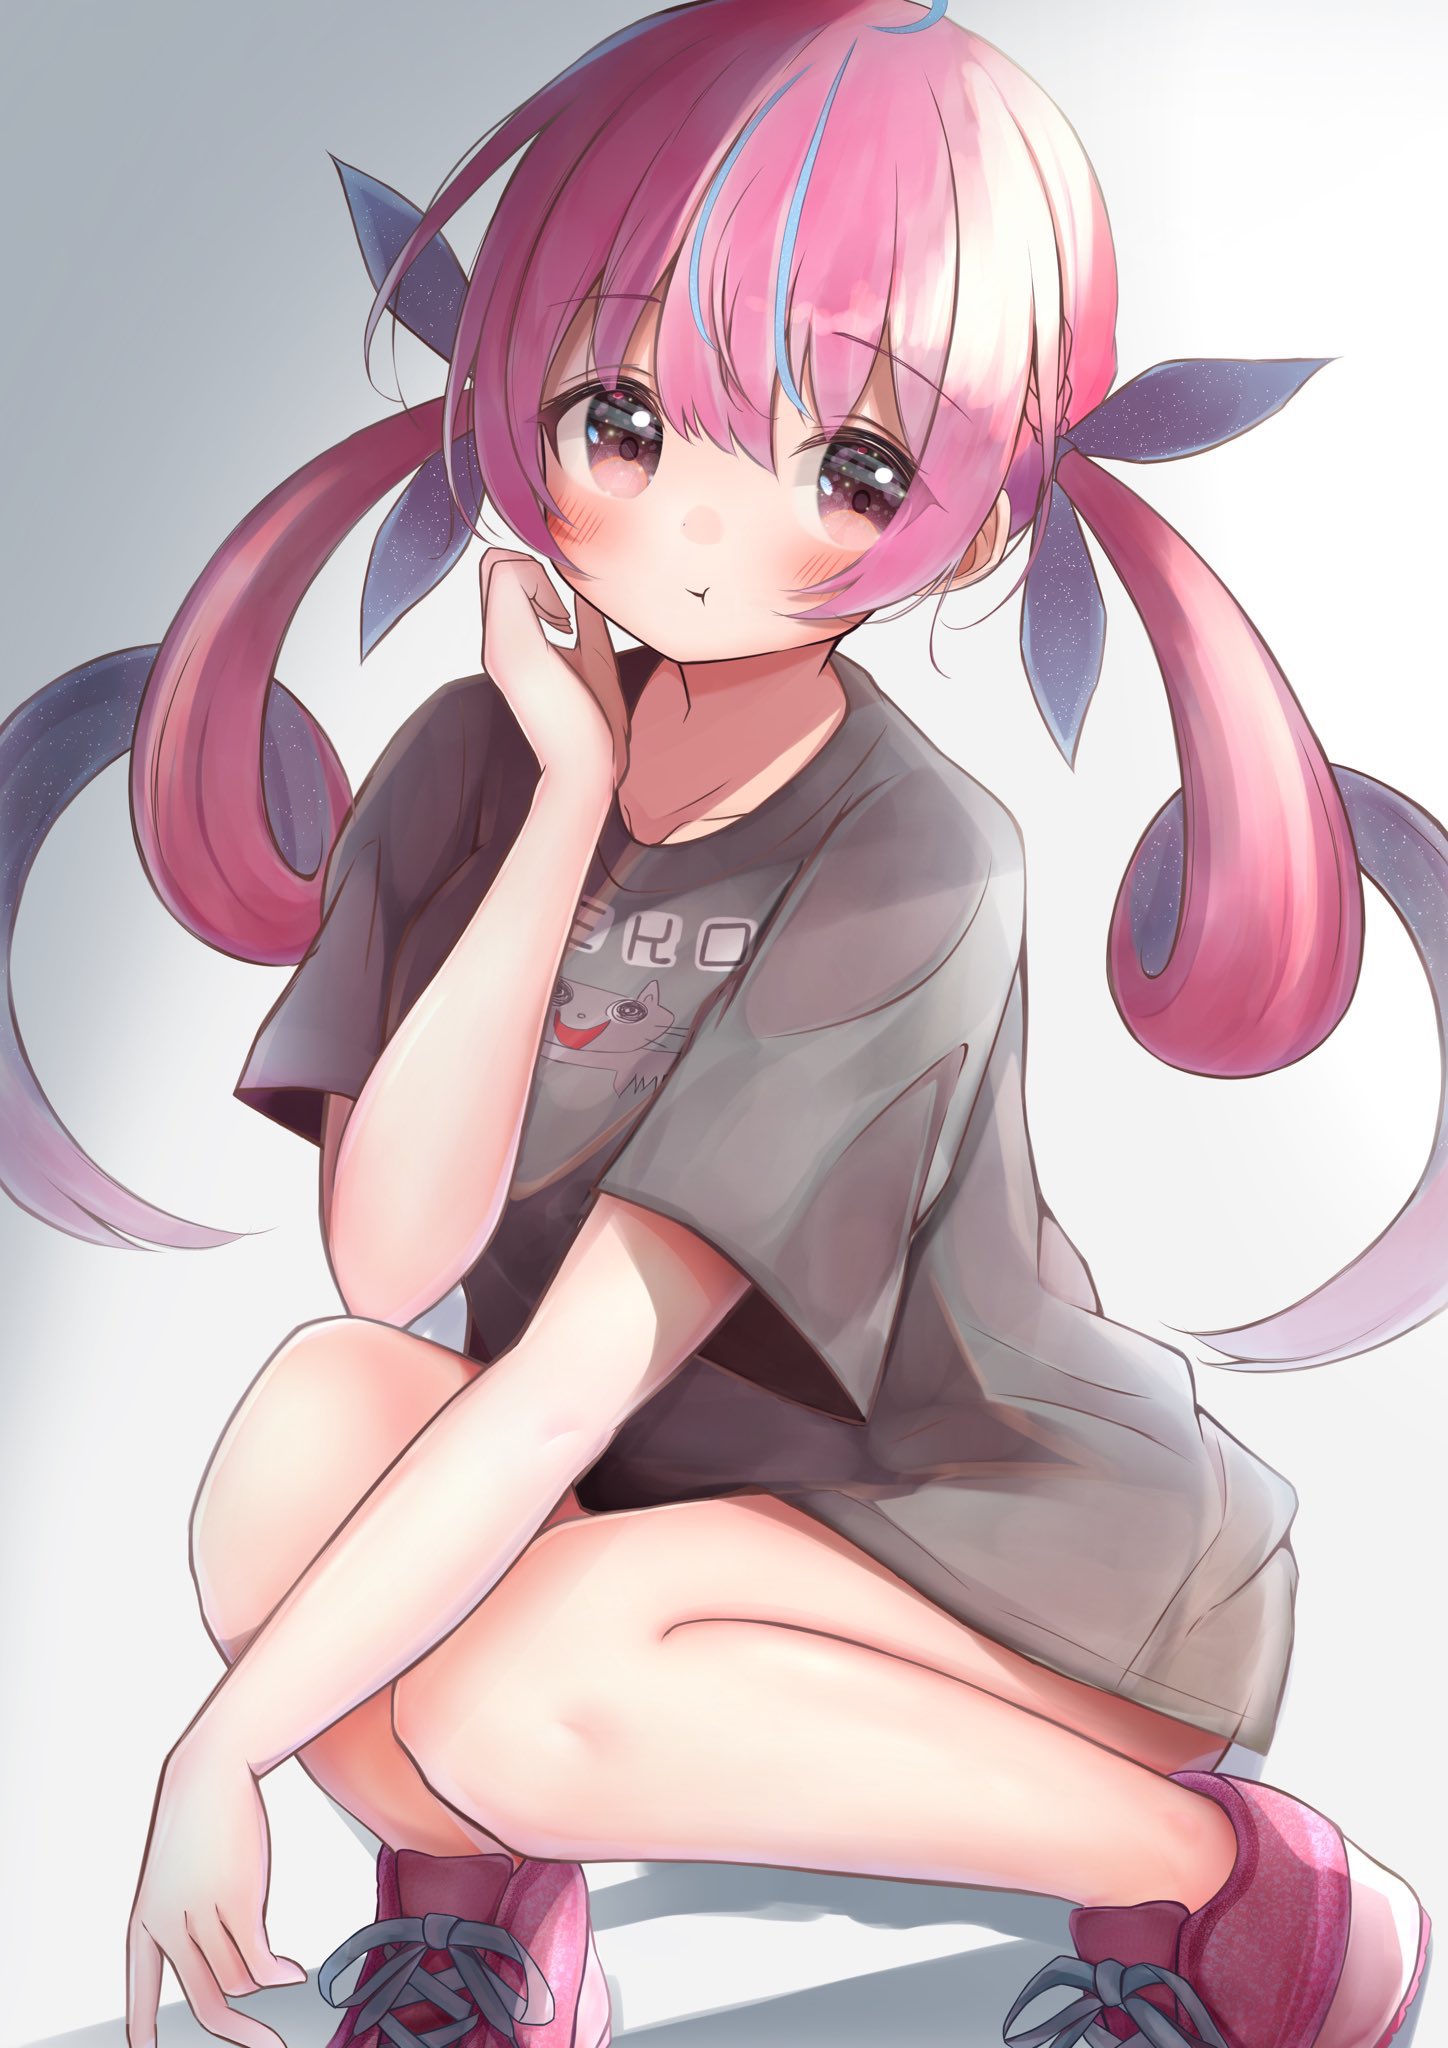 Pink hair anime girl pouting